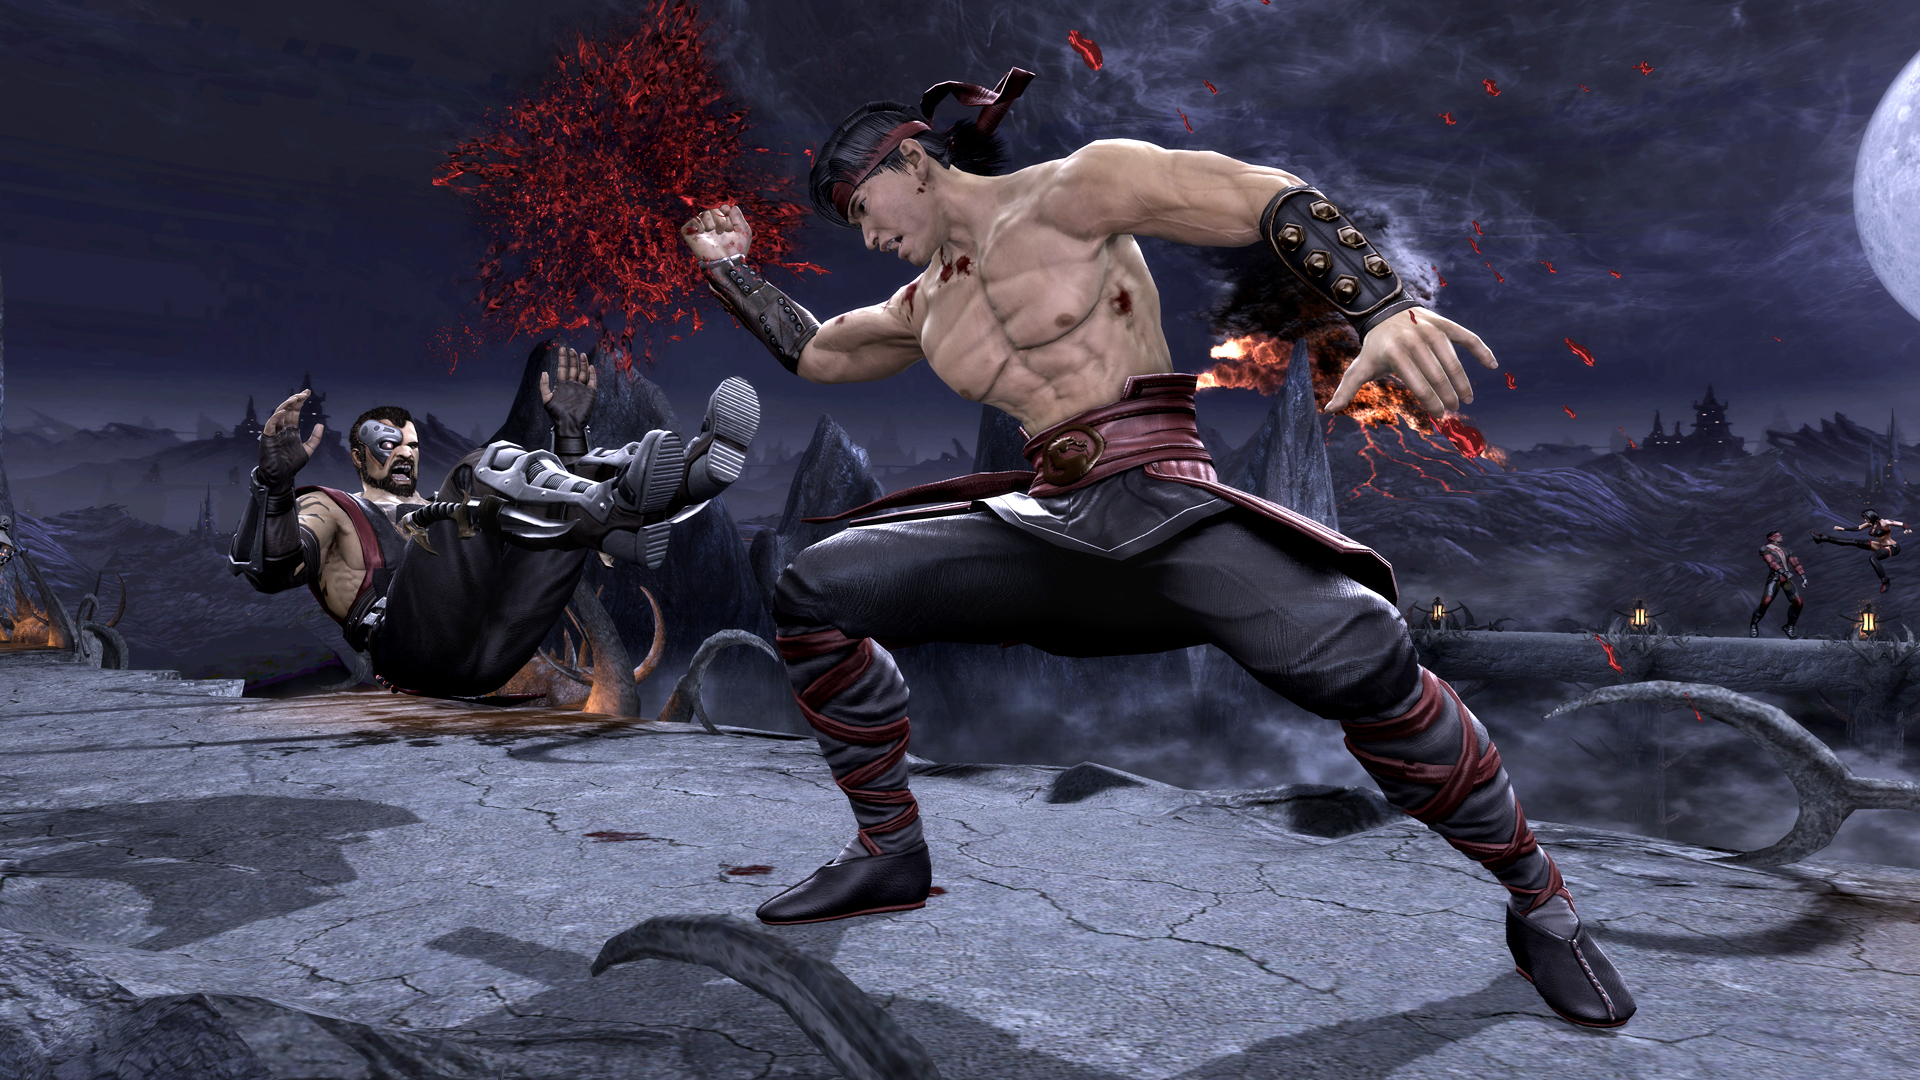 Download Kano Unleashes His Power in Mortal Kombat Wallpaper | Wallpapers .com